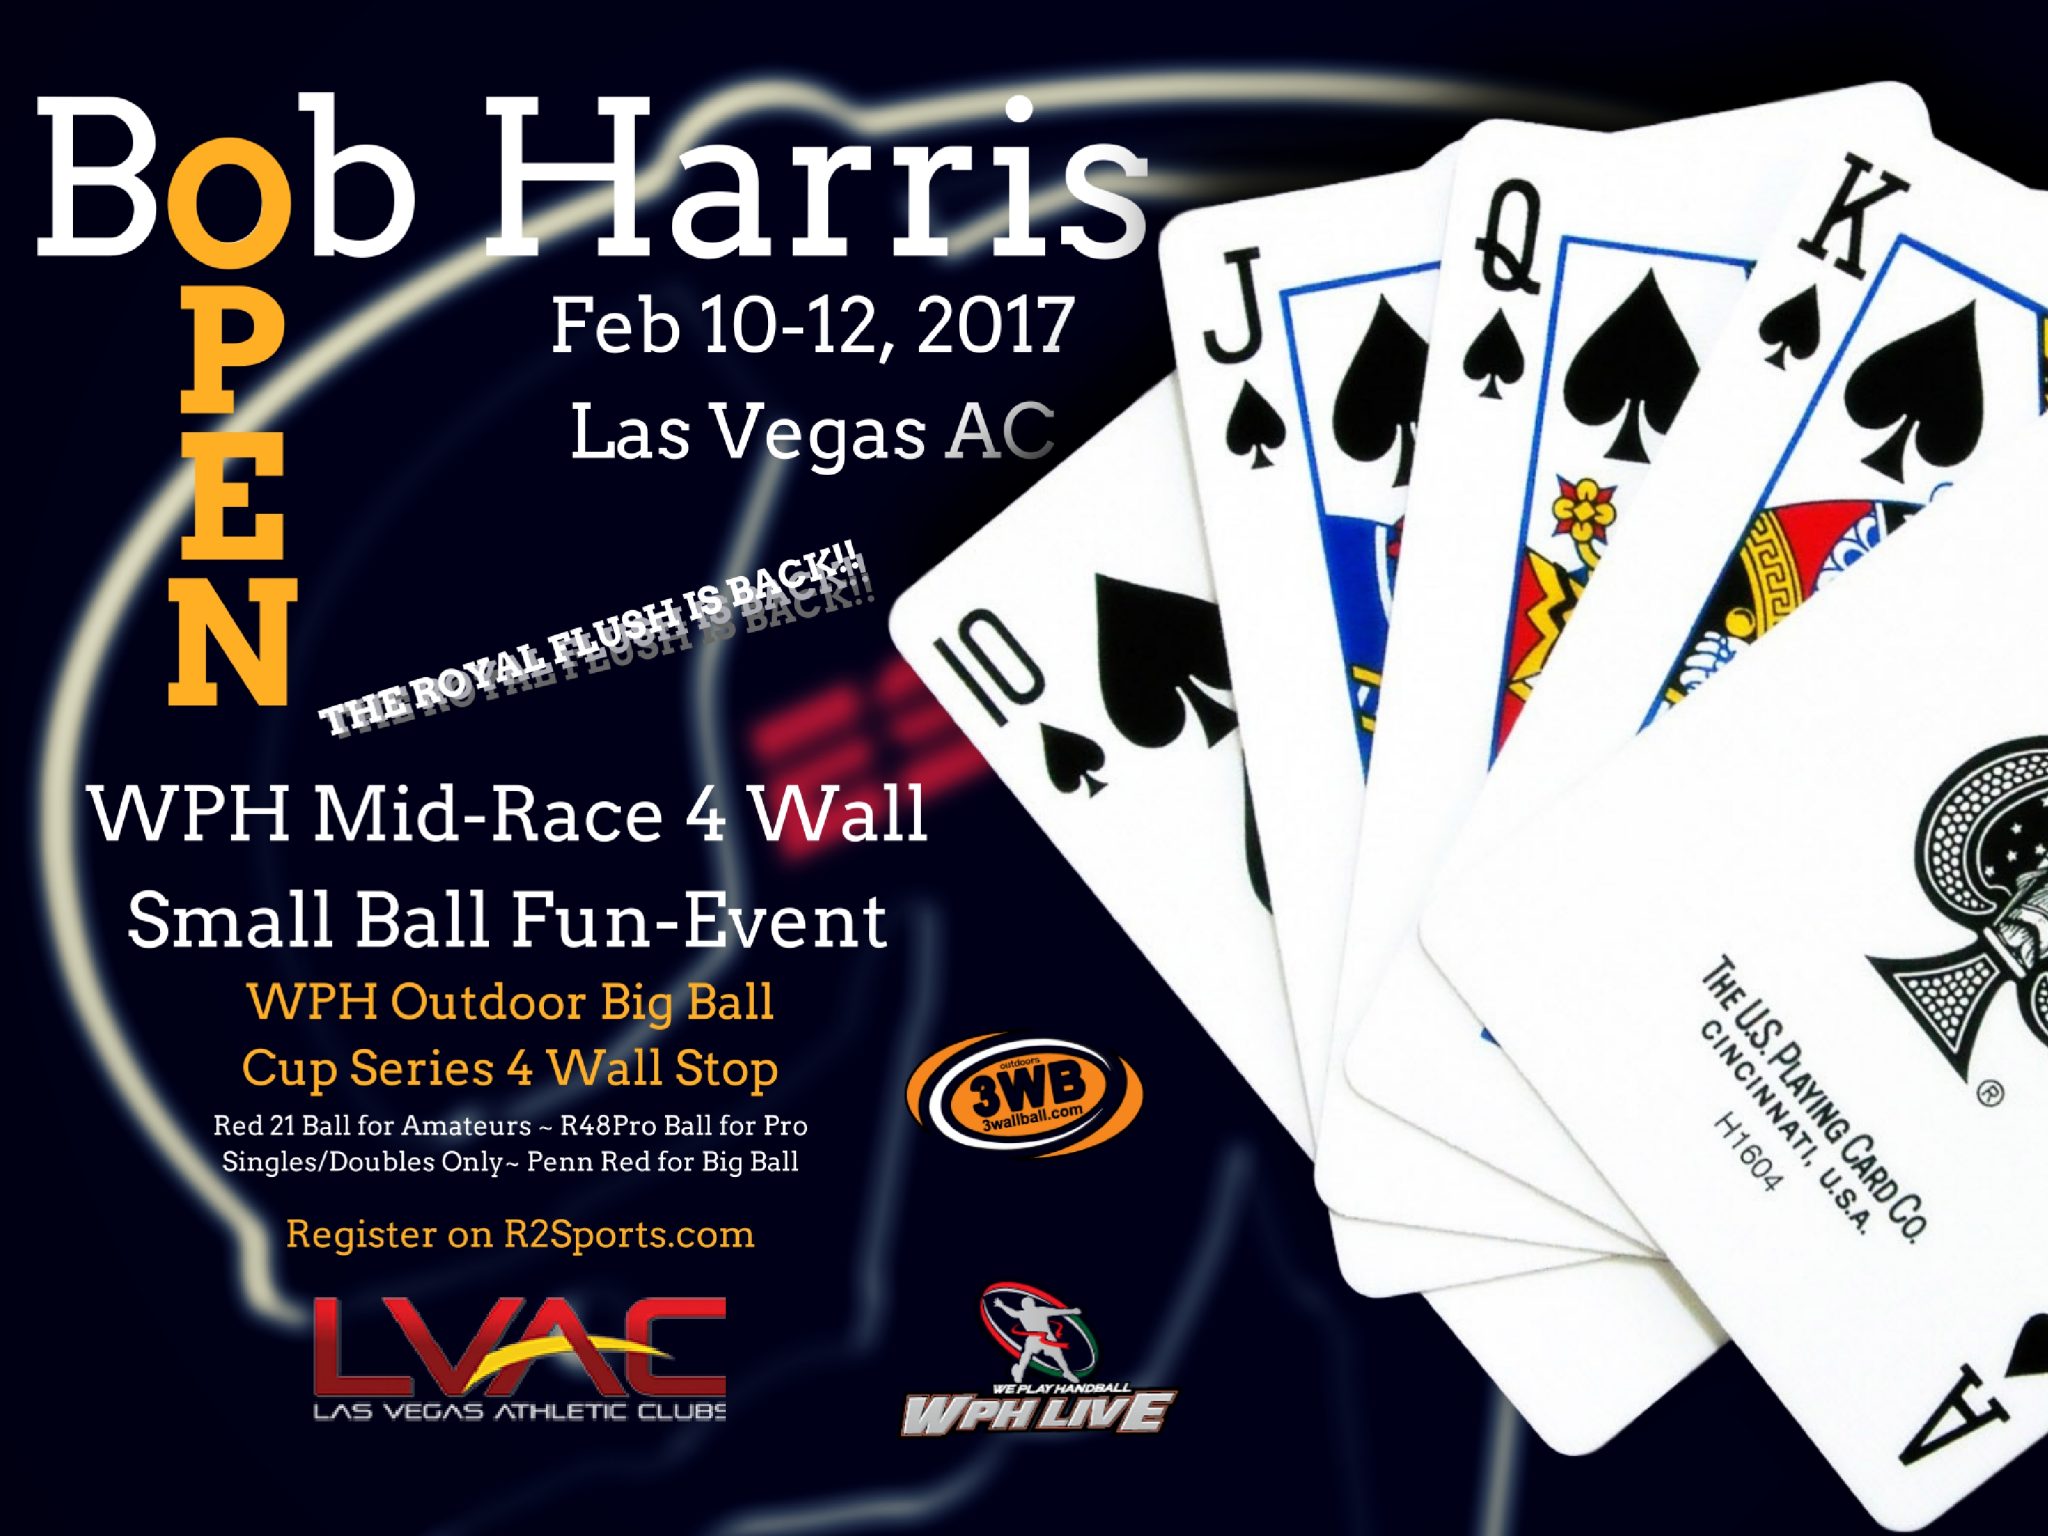 WPH/3WB Royal Flush - The Bob Harris Open & 4 Wall Big Ball Cup Stop